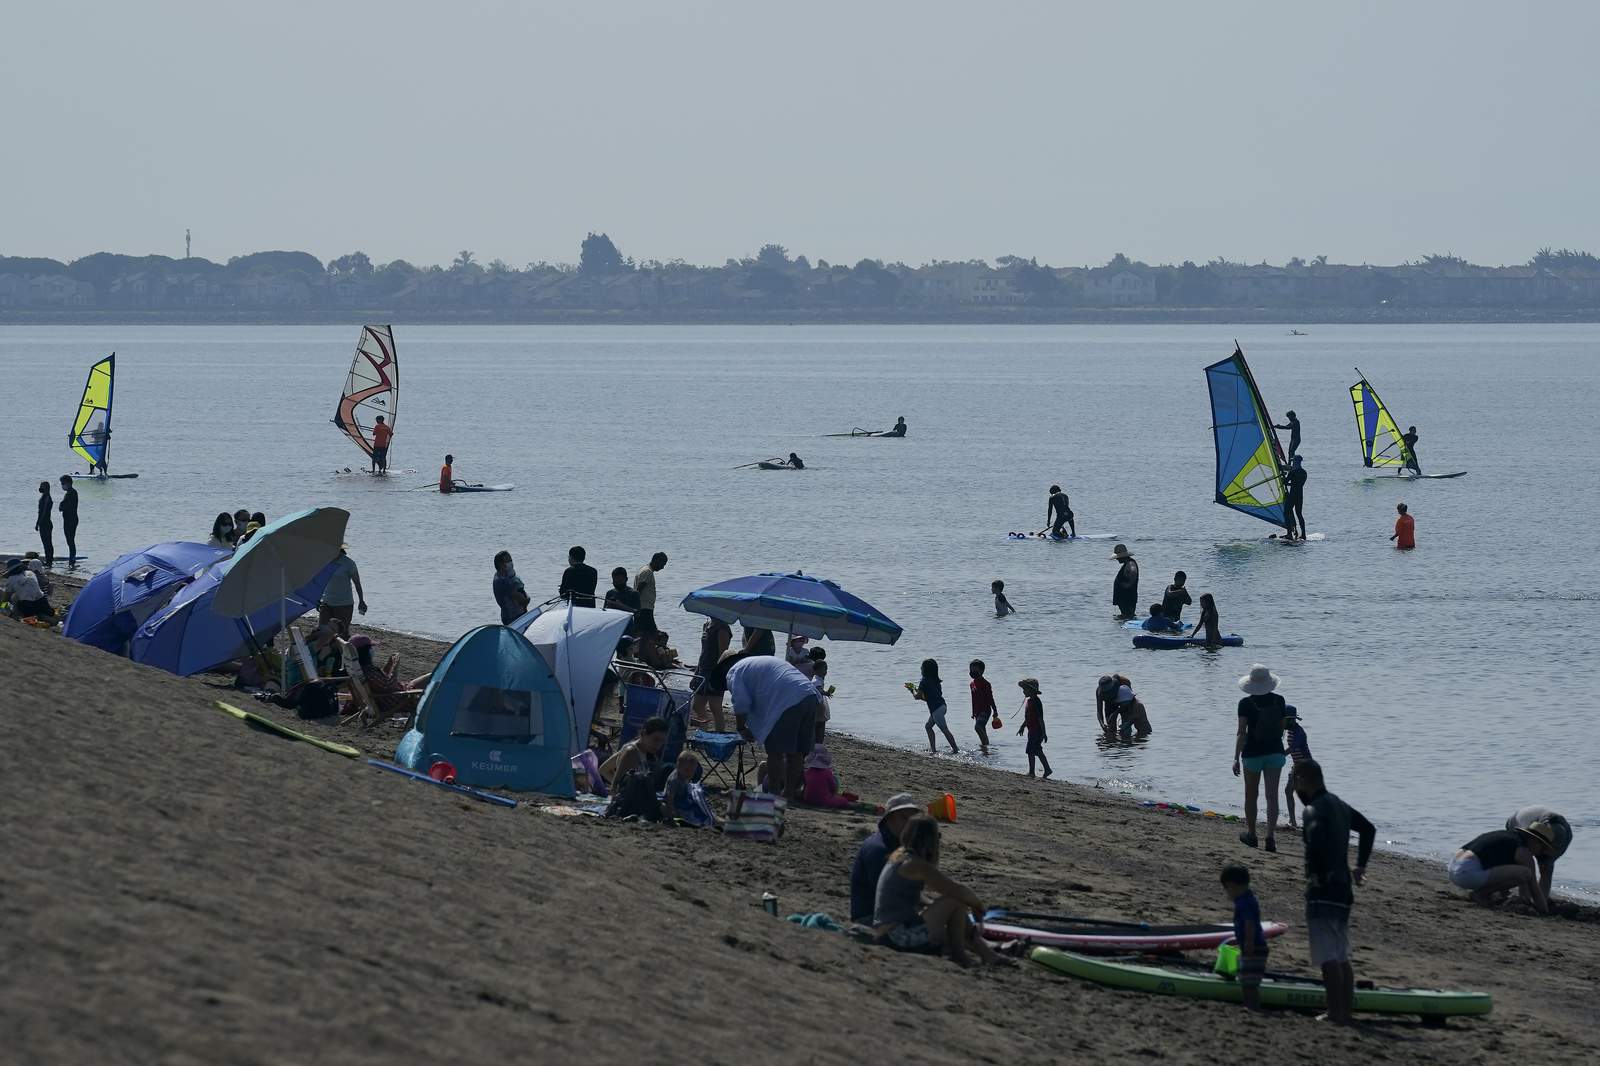 Crowds pack beaches as California bakes in weekend heat wave